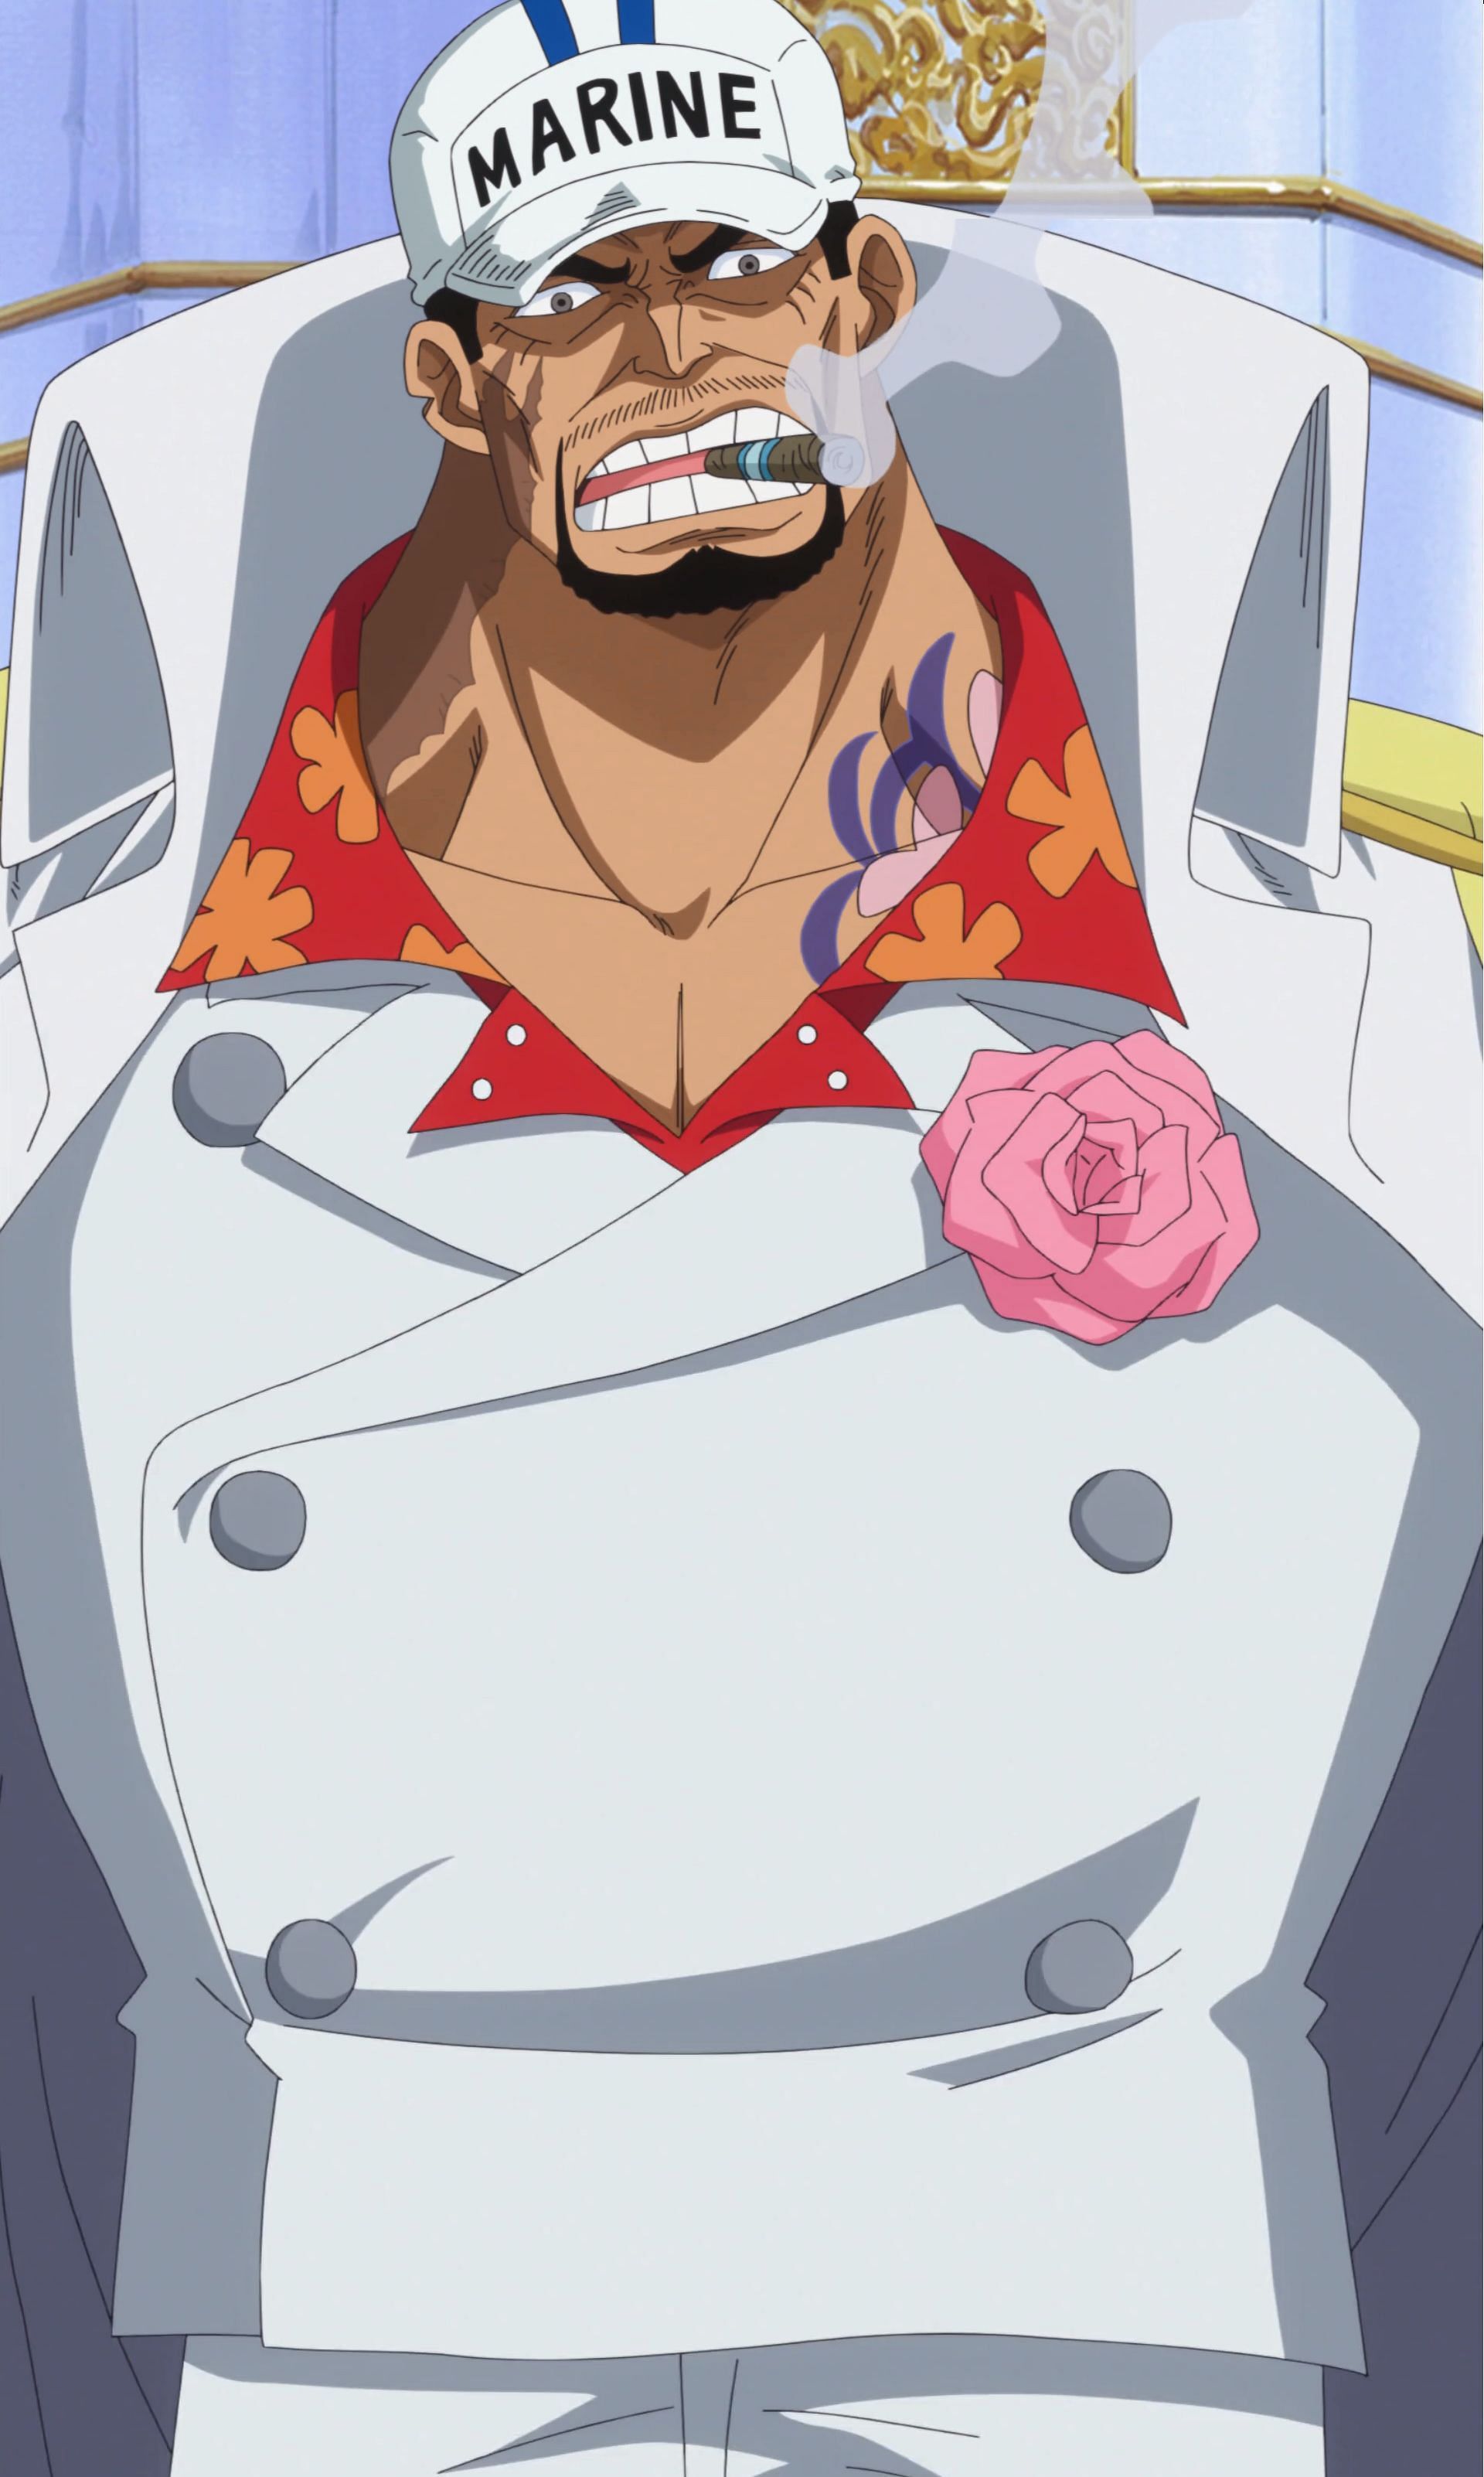 Akainu as Fleet Admiral Sakazuki, seen with the scars left to him by Whitebeard during the Marineford War. (Image via Toei Animation)